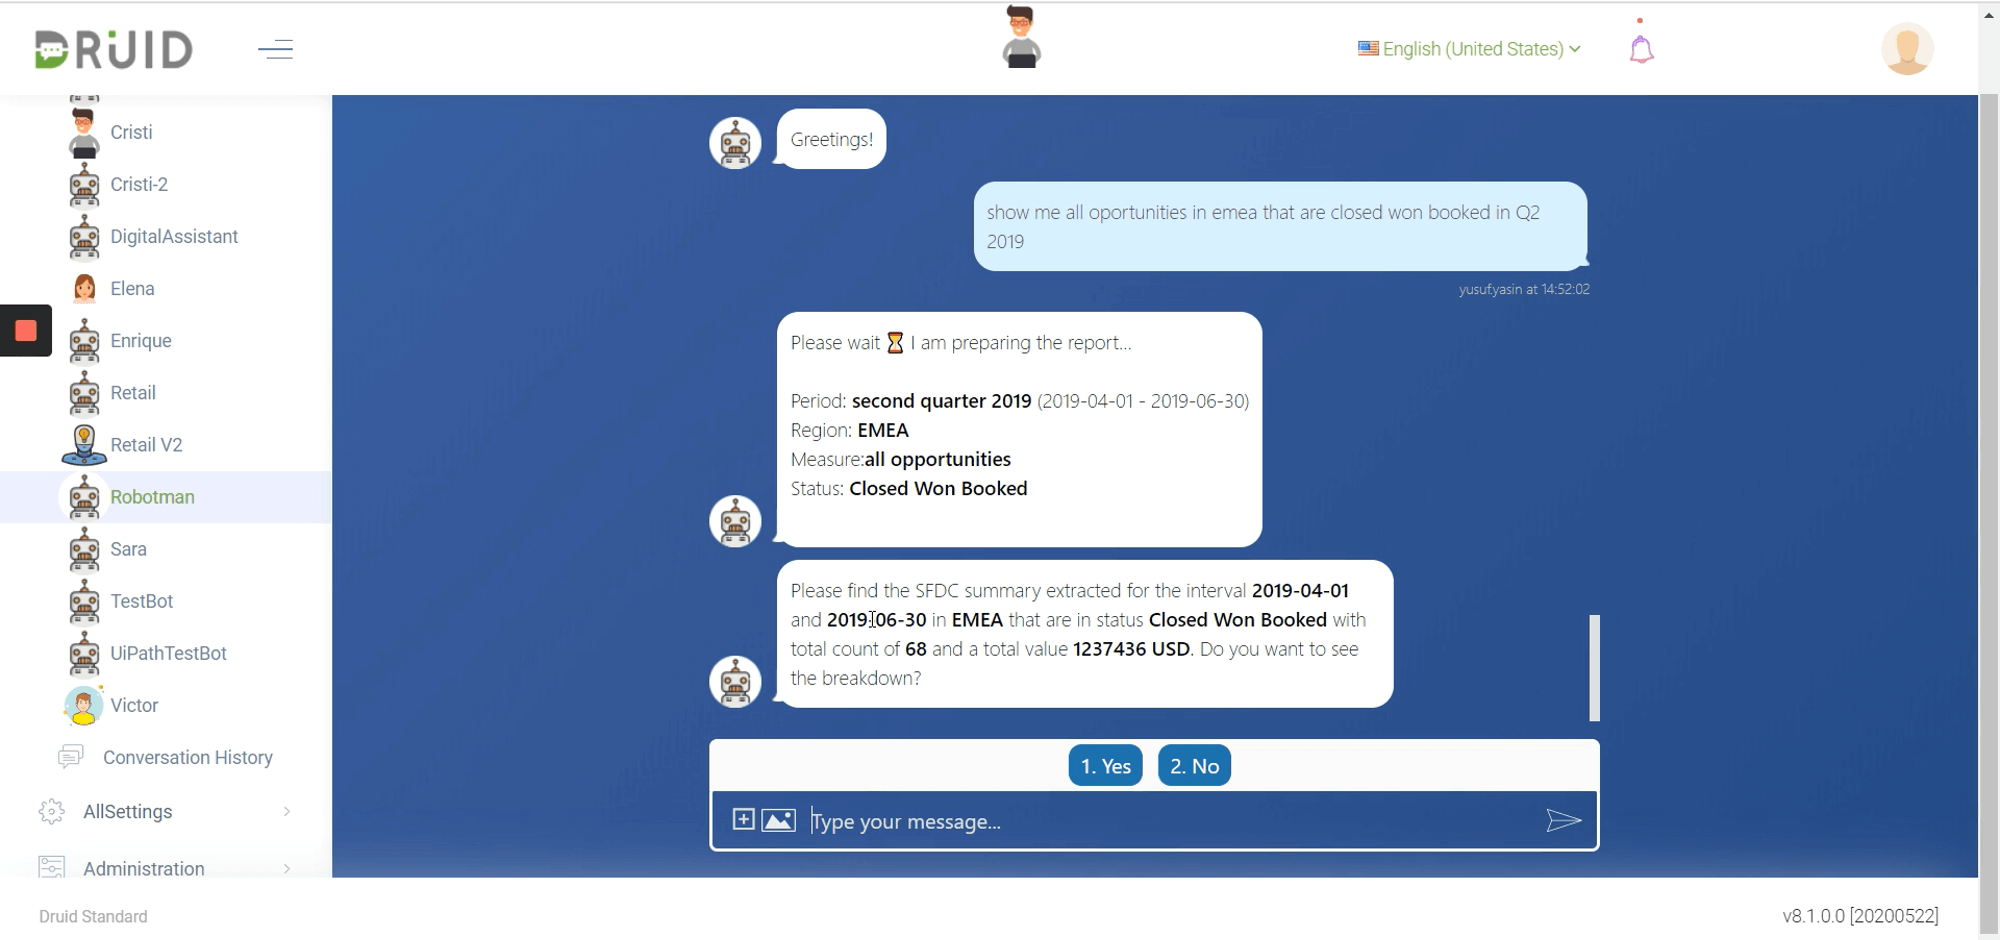 druid chatbot platform